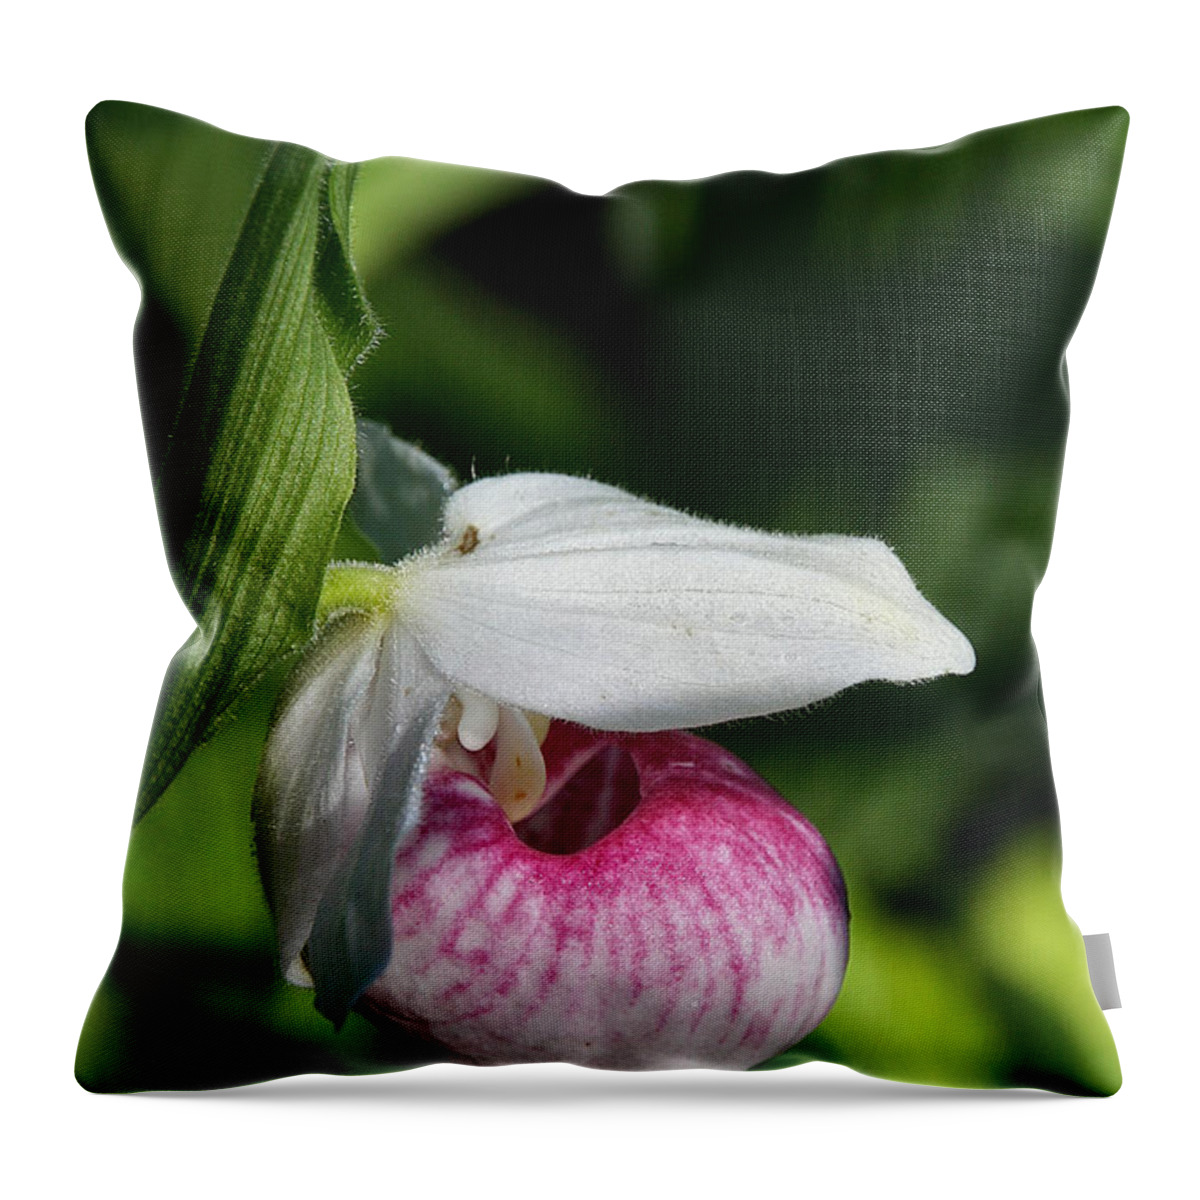 Flower Throw Pillow featuring the photograph Minnesota's Wild Flower by Susan Herber